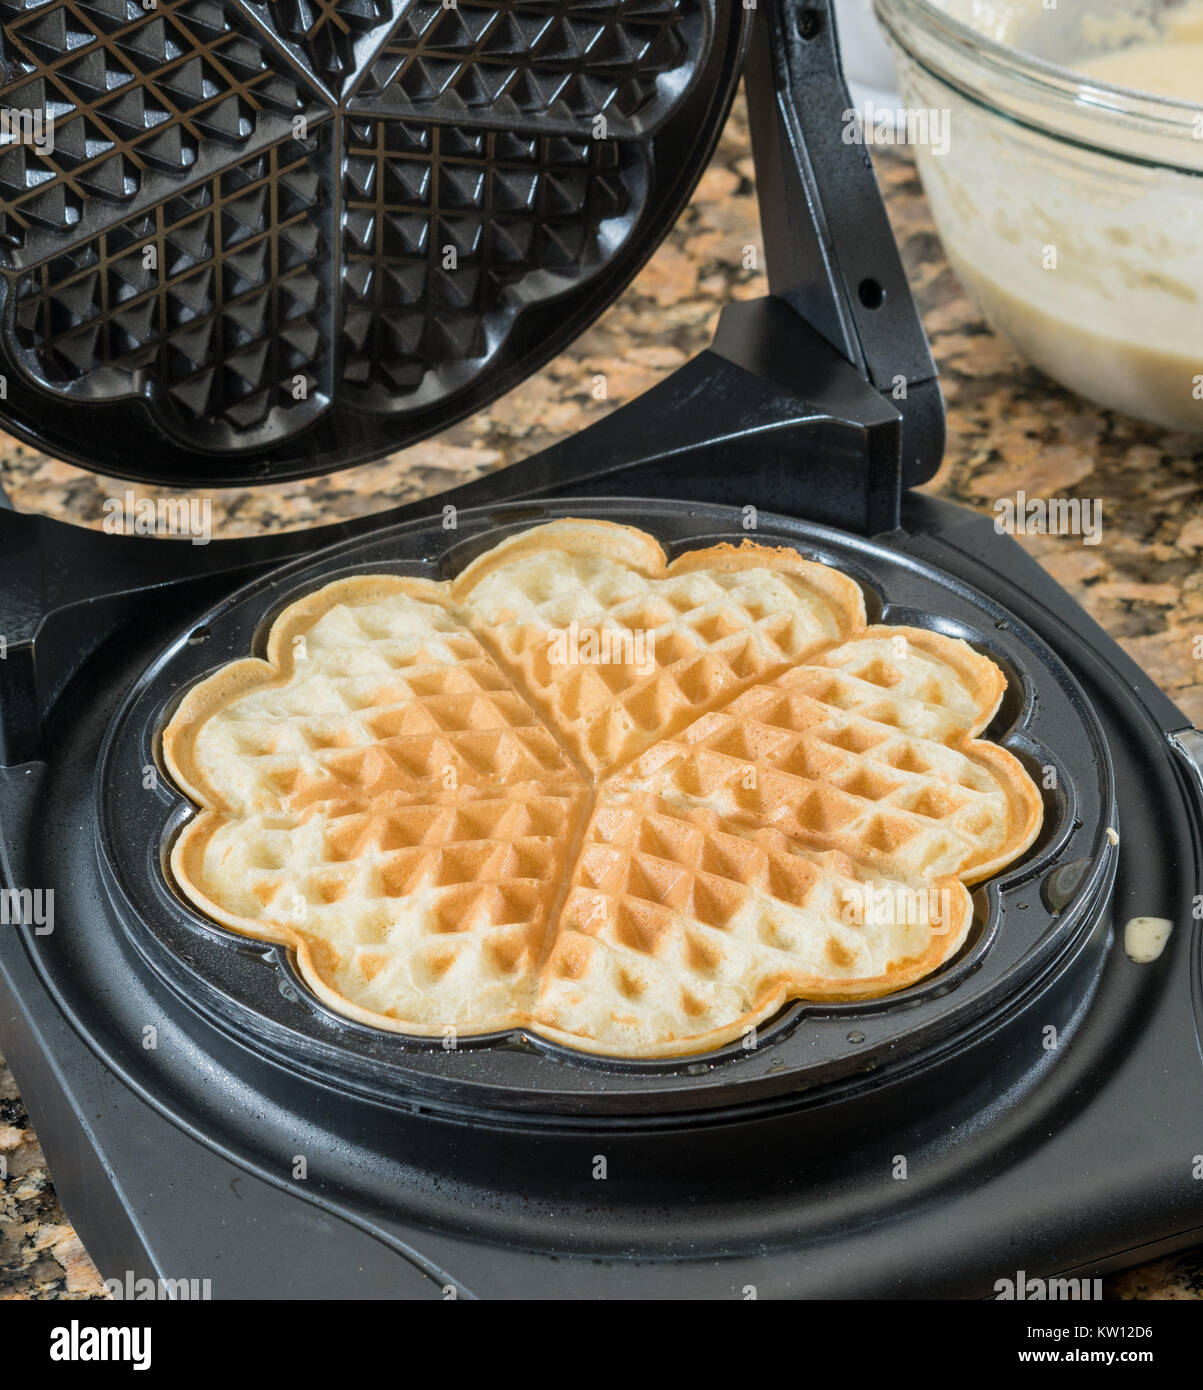 https://c8.alamy.com/compes/kw12d6/maquina-para-hacer-waffles-noruegos-o-hierro-kw12d6.jpg